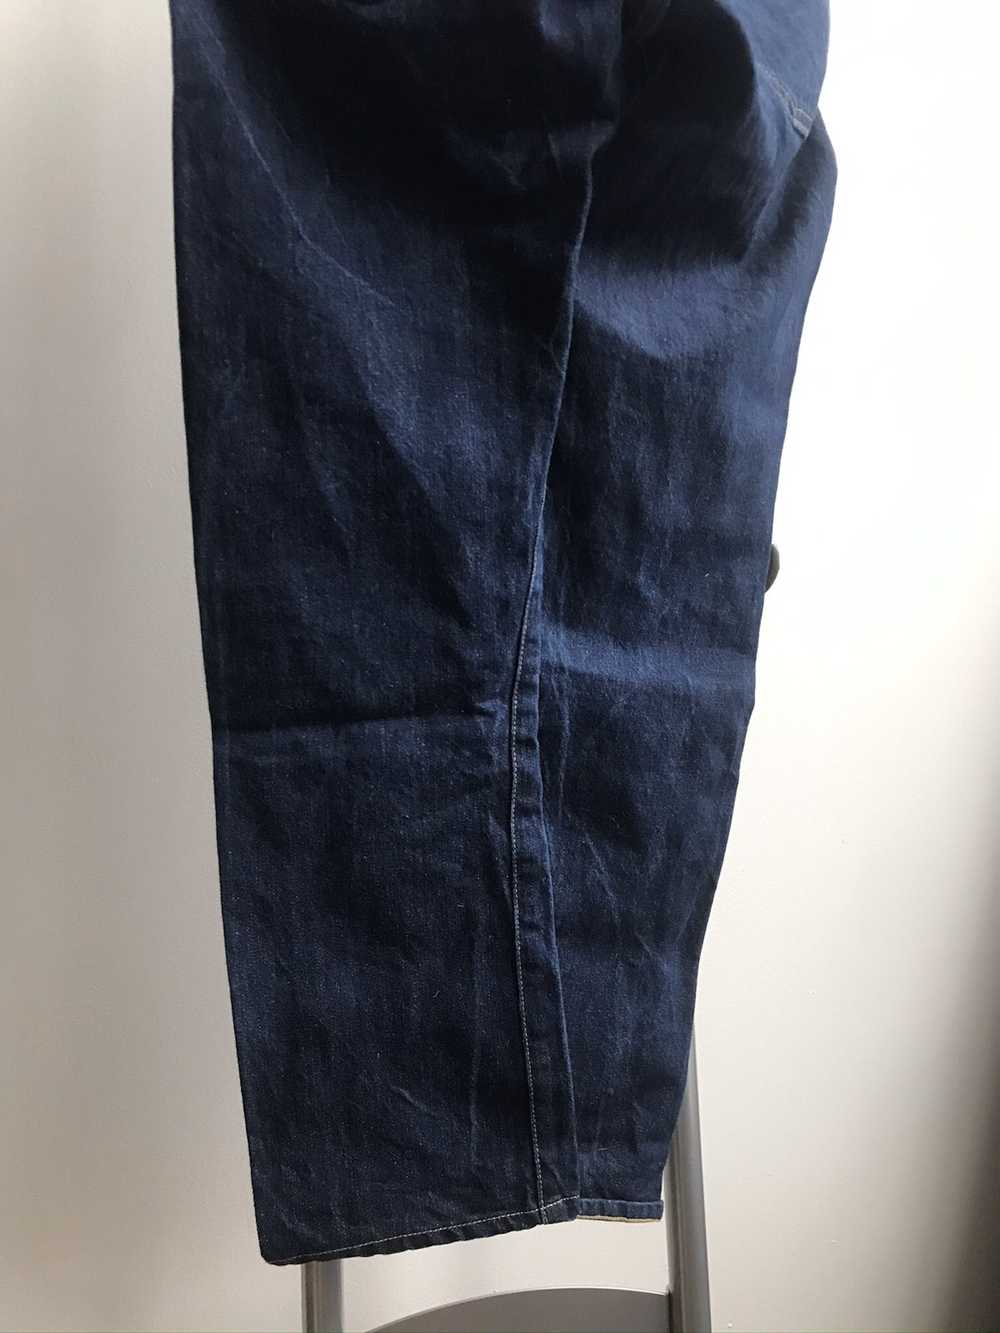 Taylor Stitch Selvedge Denim Jeans 30x32 - image 9